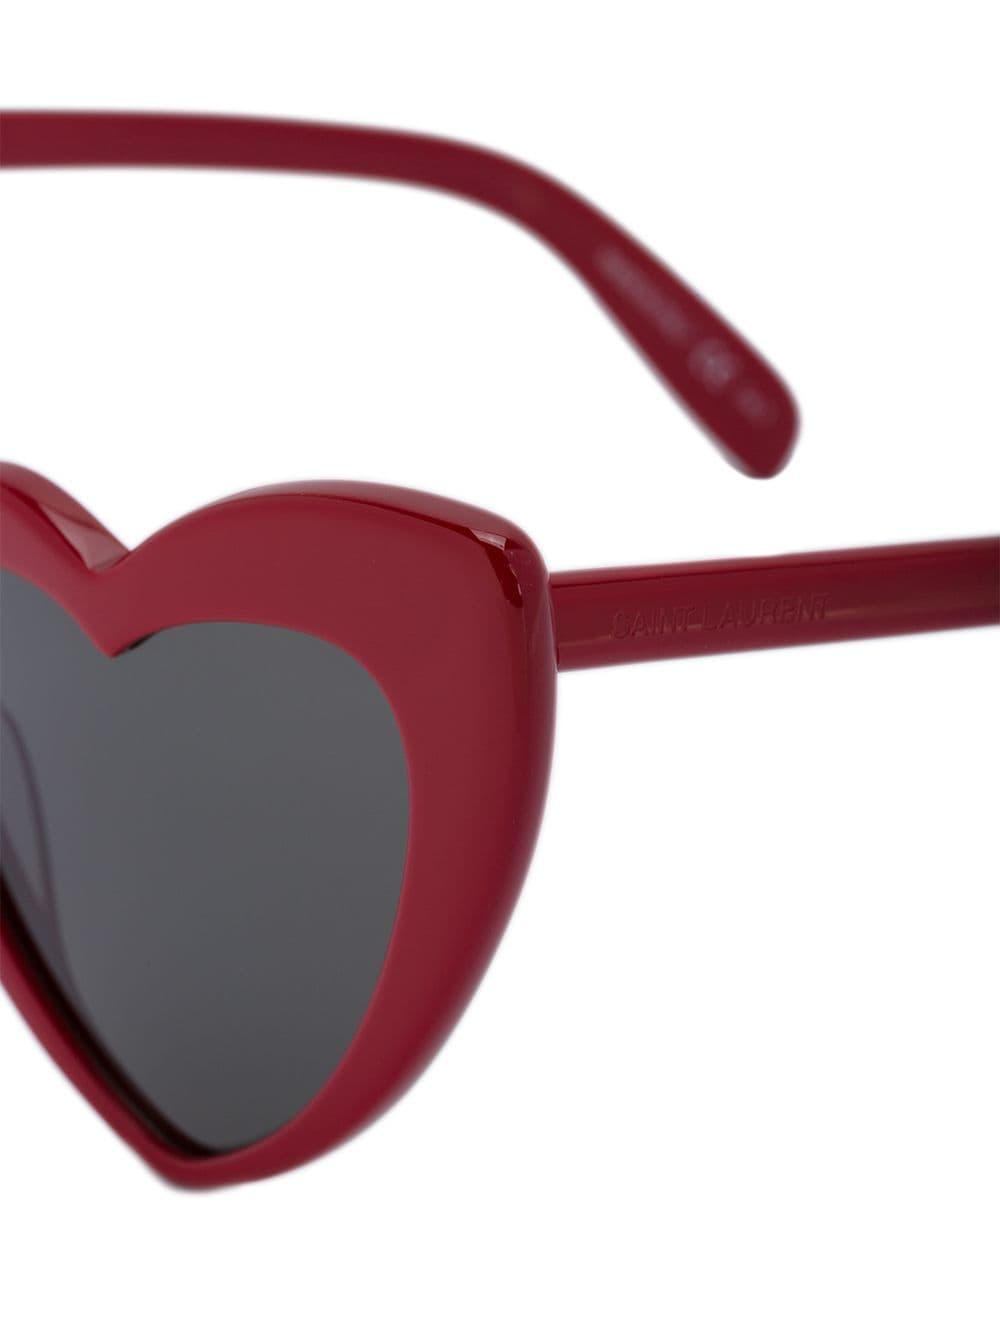 Saint Laurent Eyewear New Wave 181 LouLou Sunglasses - Farfetch